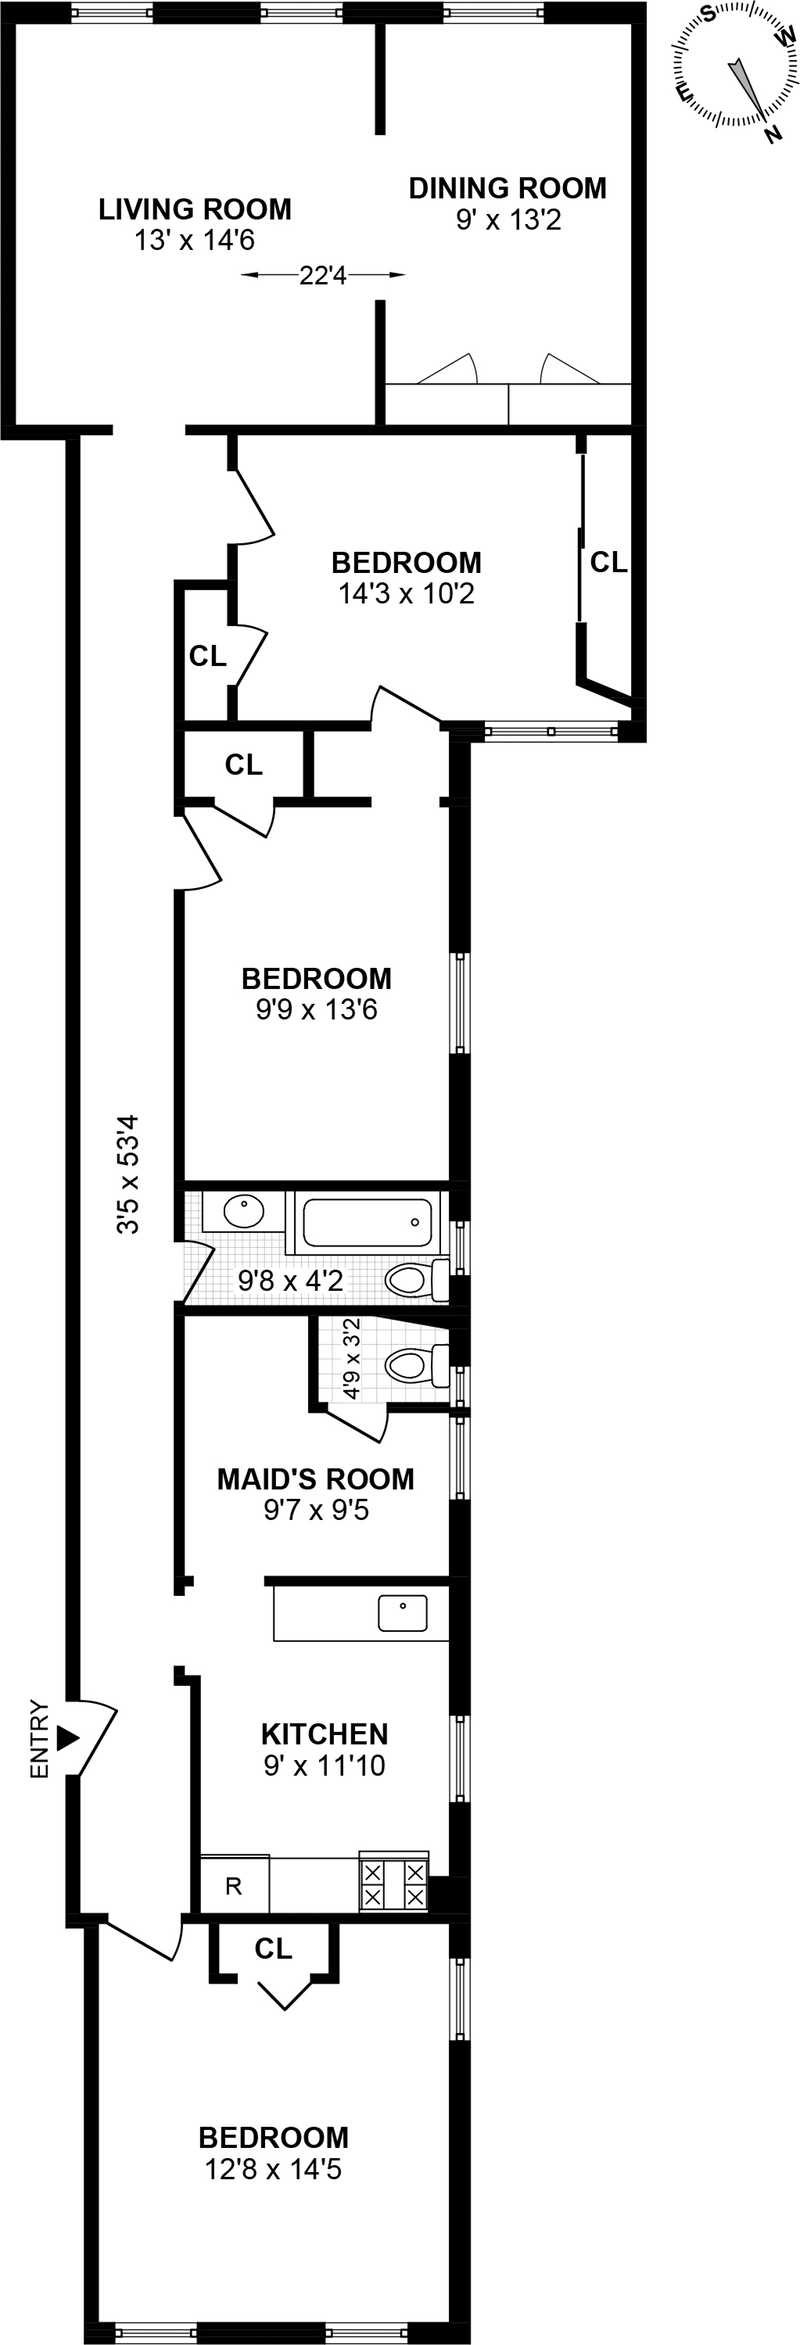 Floorplan for 547 West 147th Street